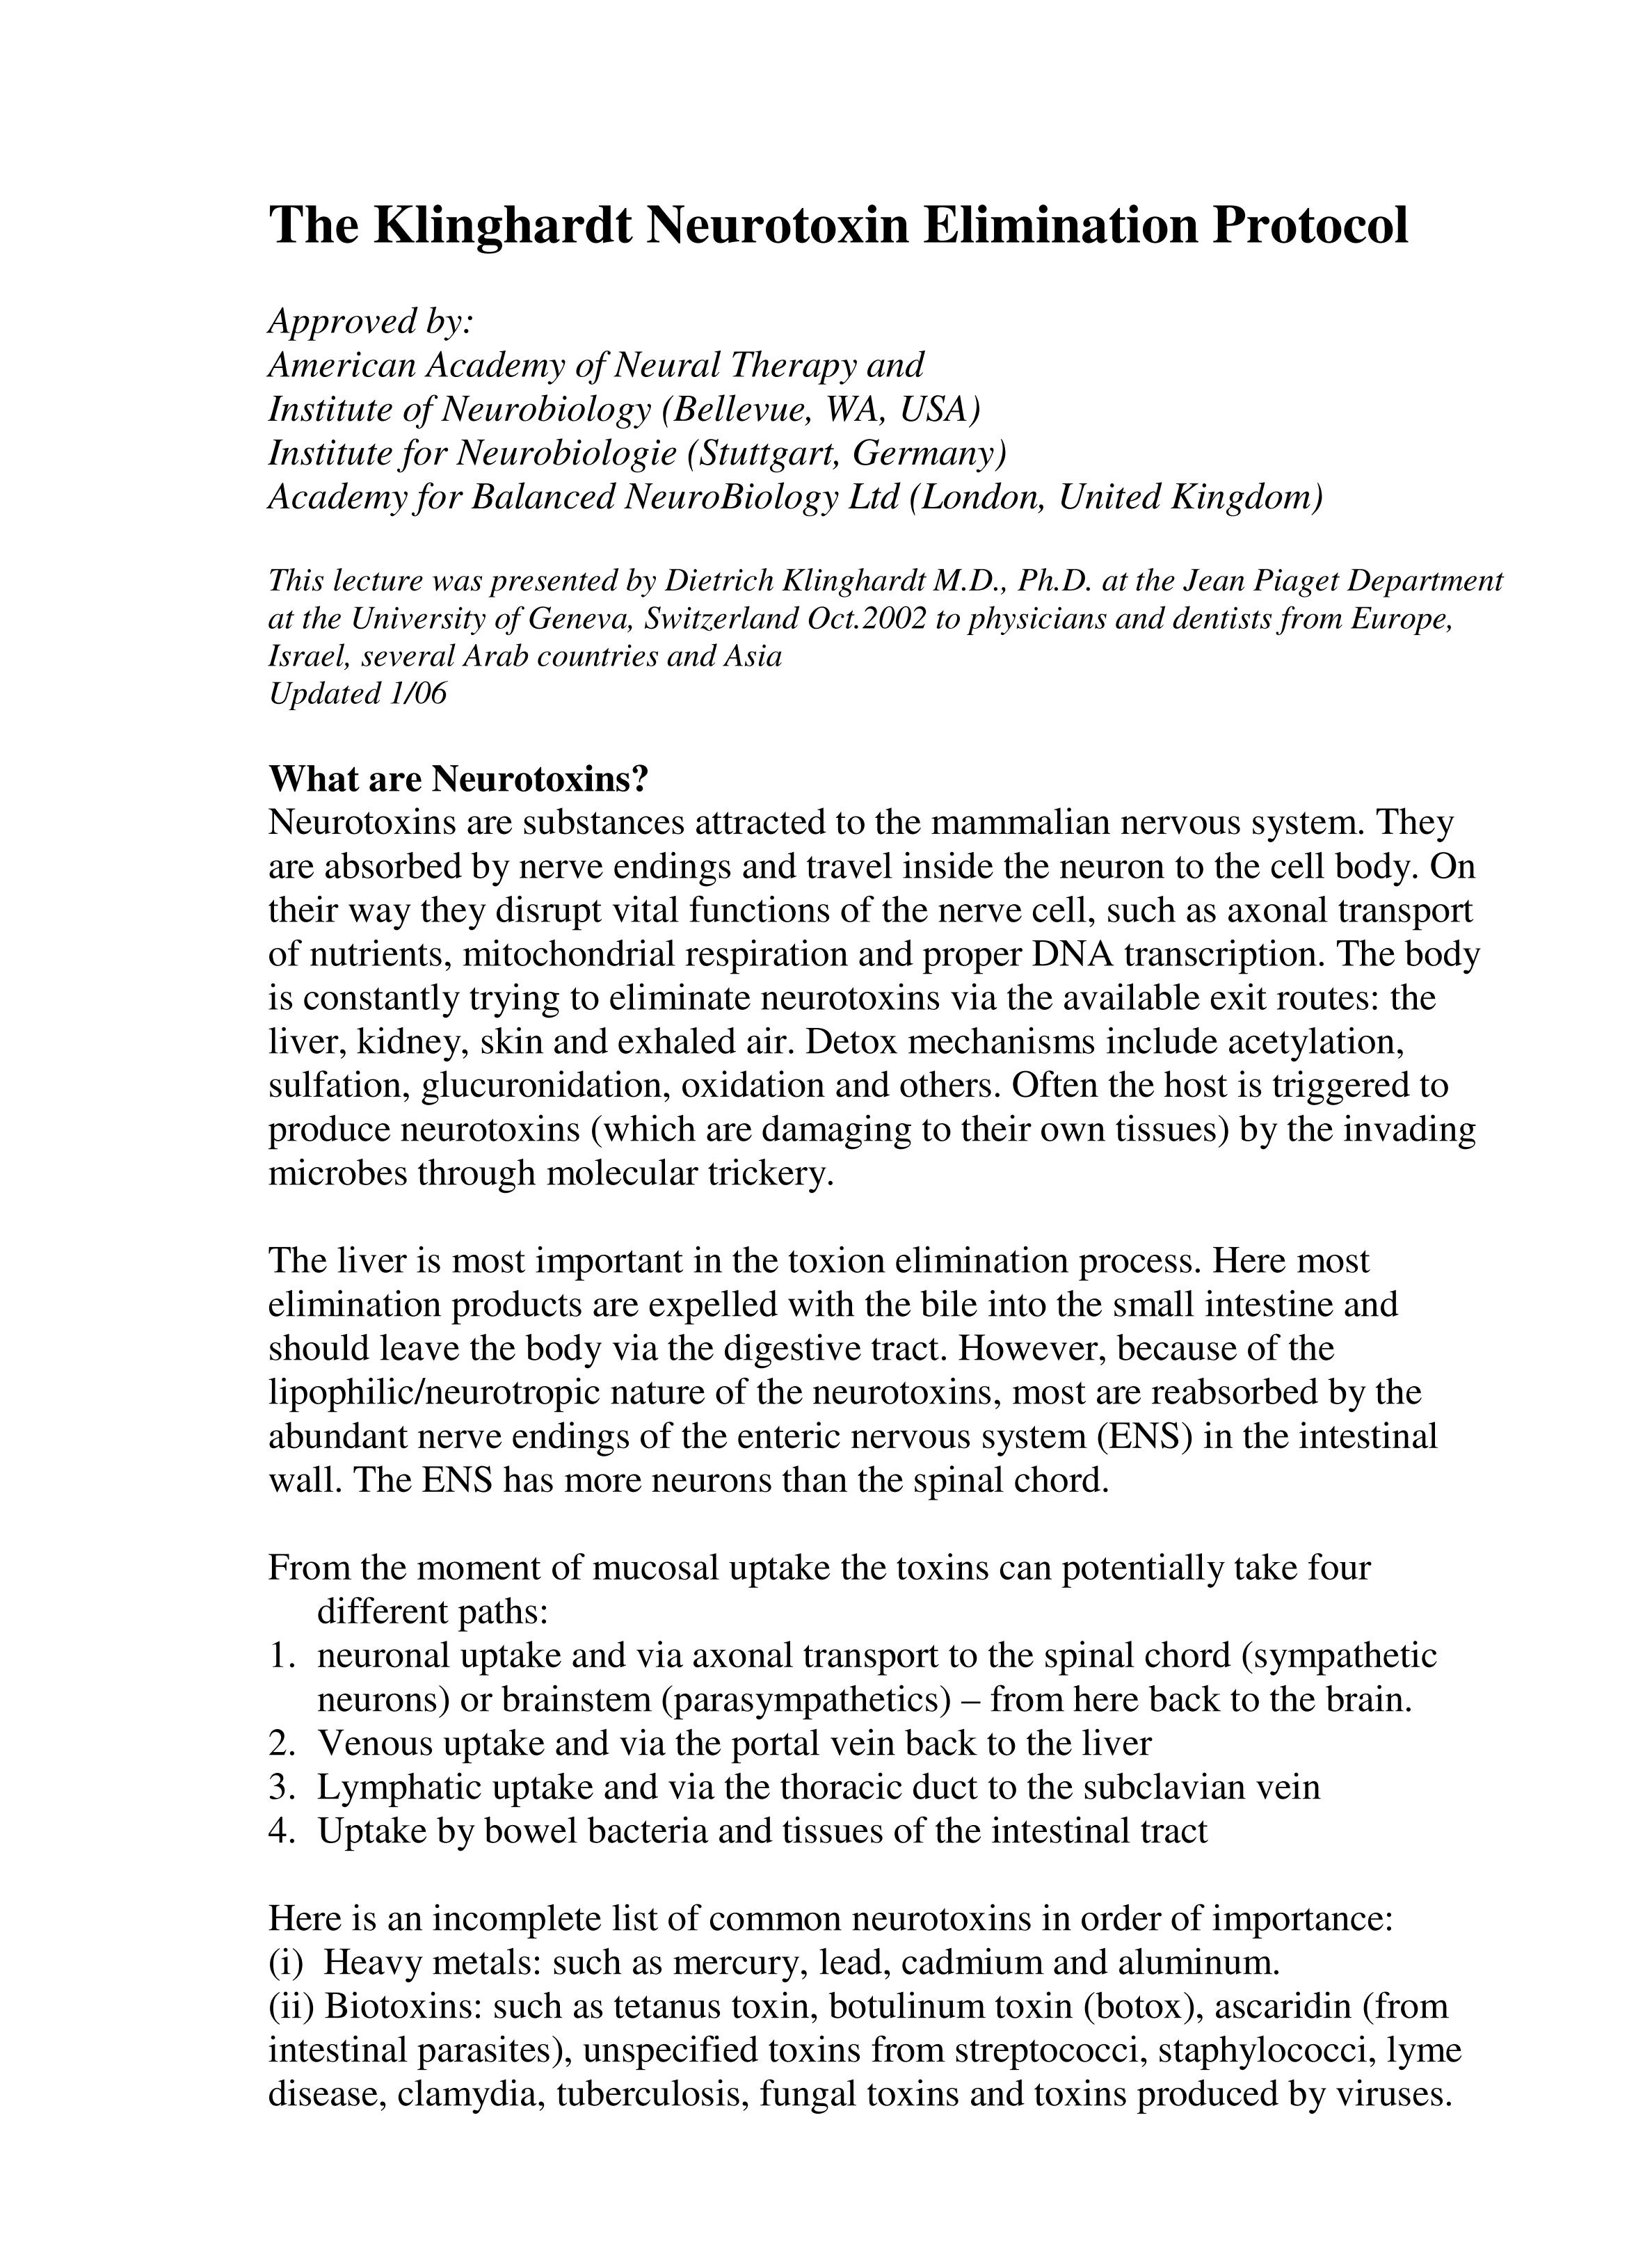 Klinghardt Neurotoxin Protocols page 1